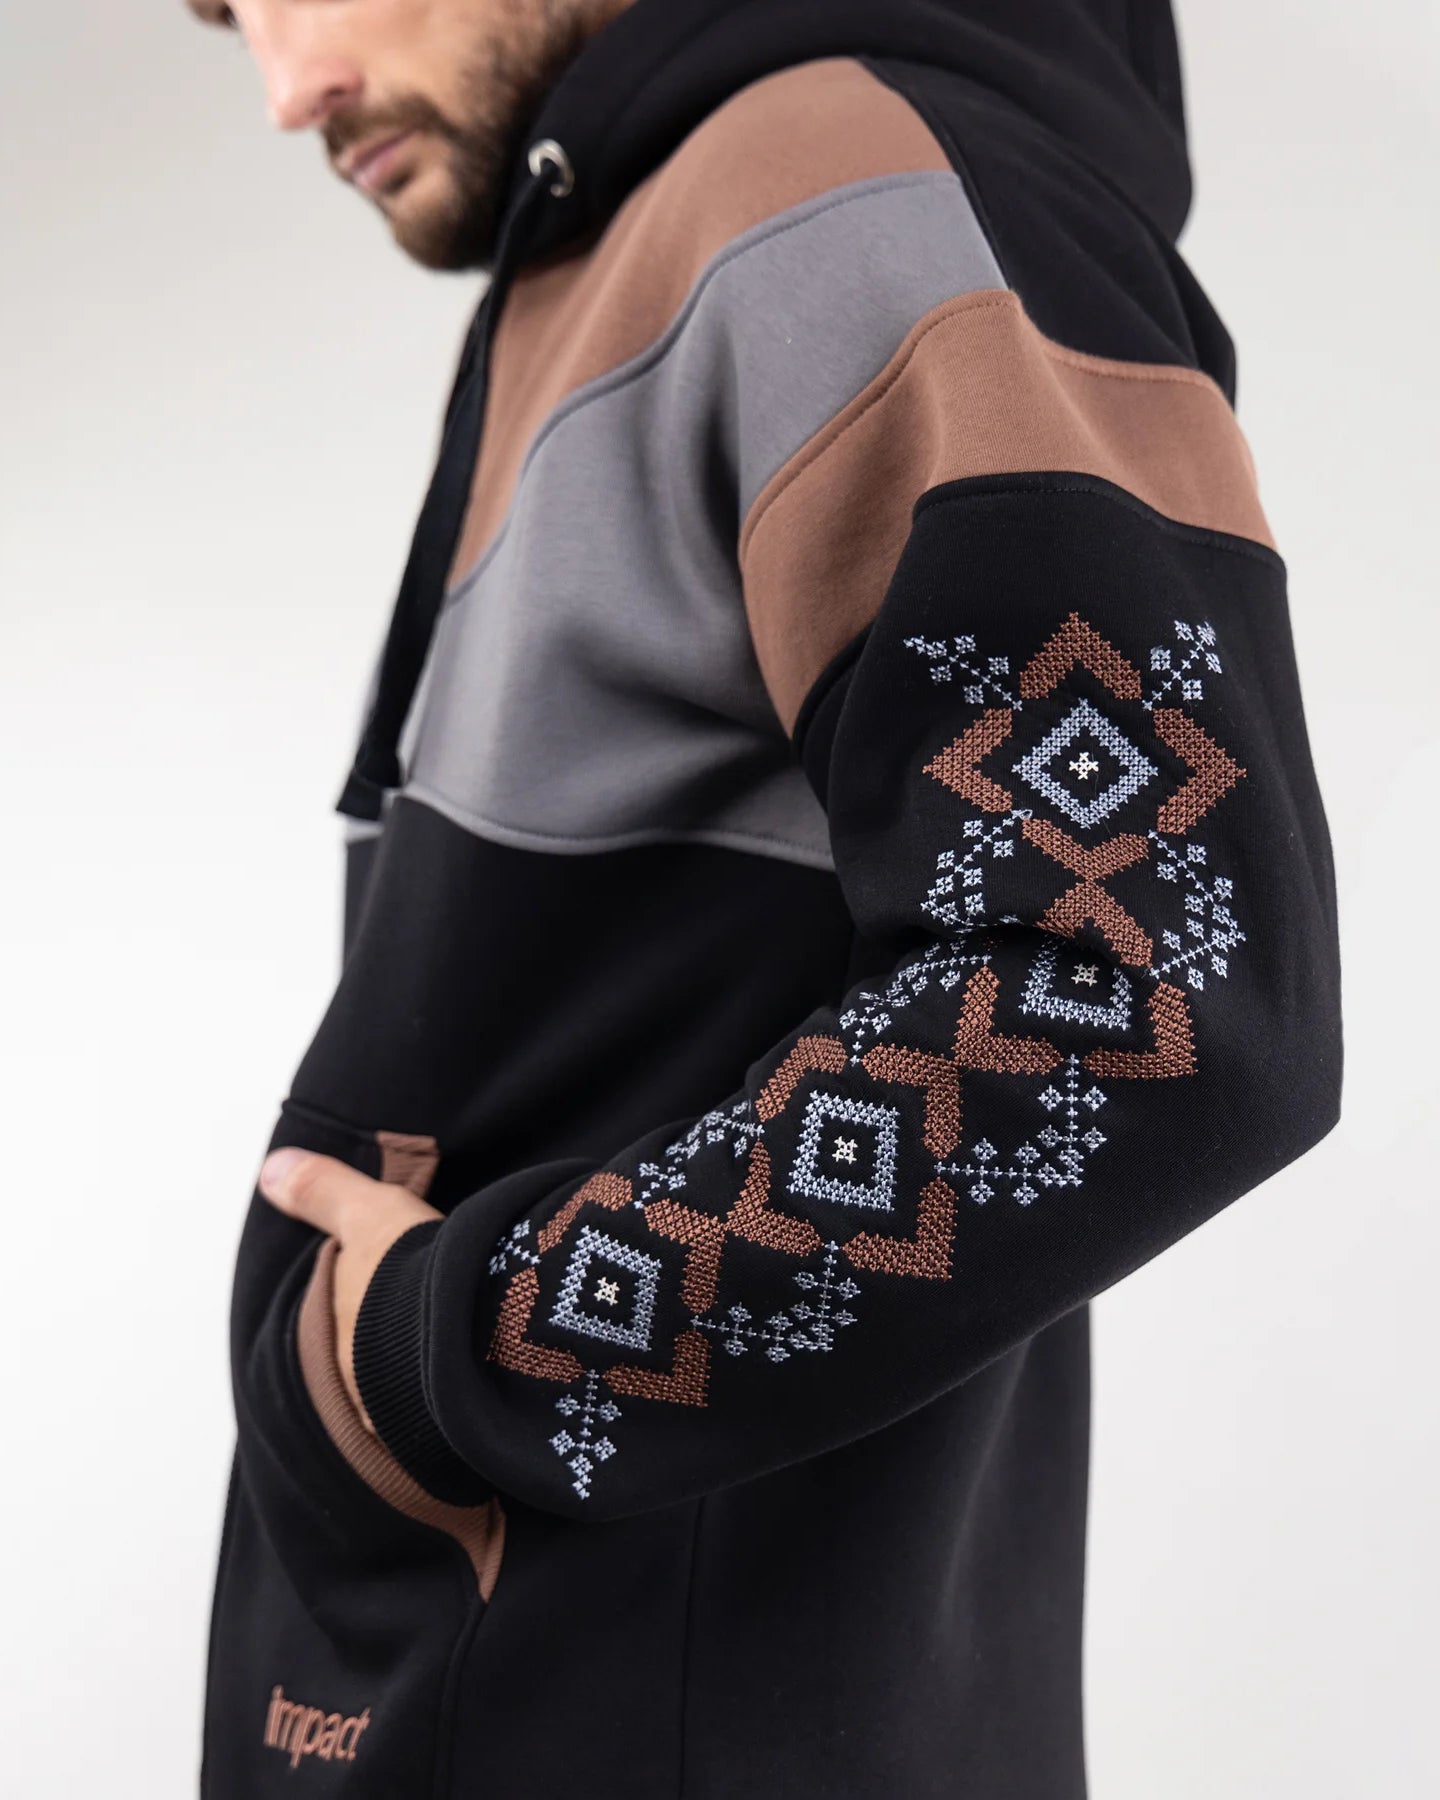 Stylish and Warm Zip-up hoodie “Sunrise”, Ukrainian vyshyvanka style